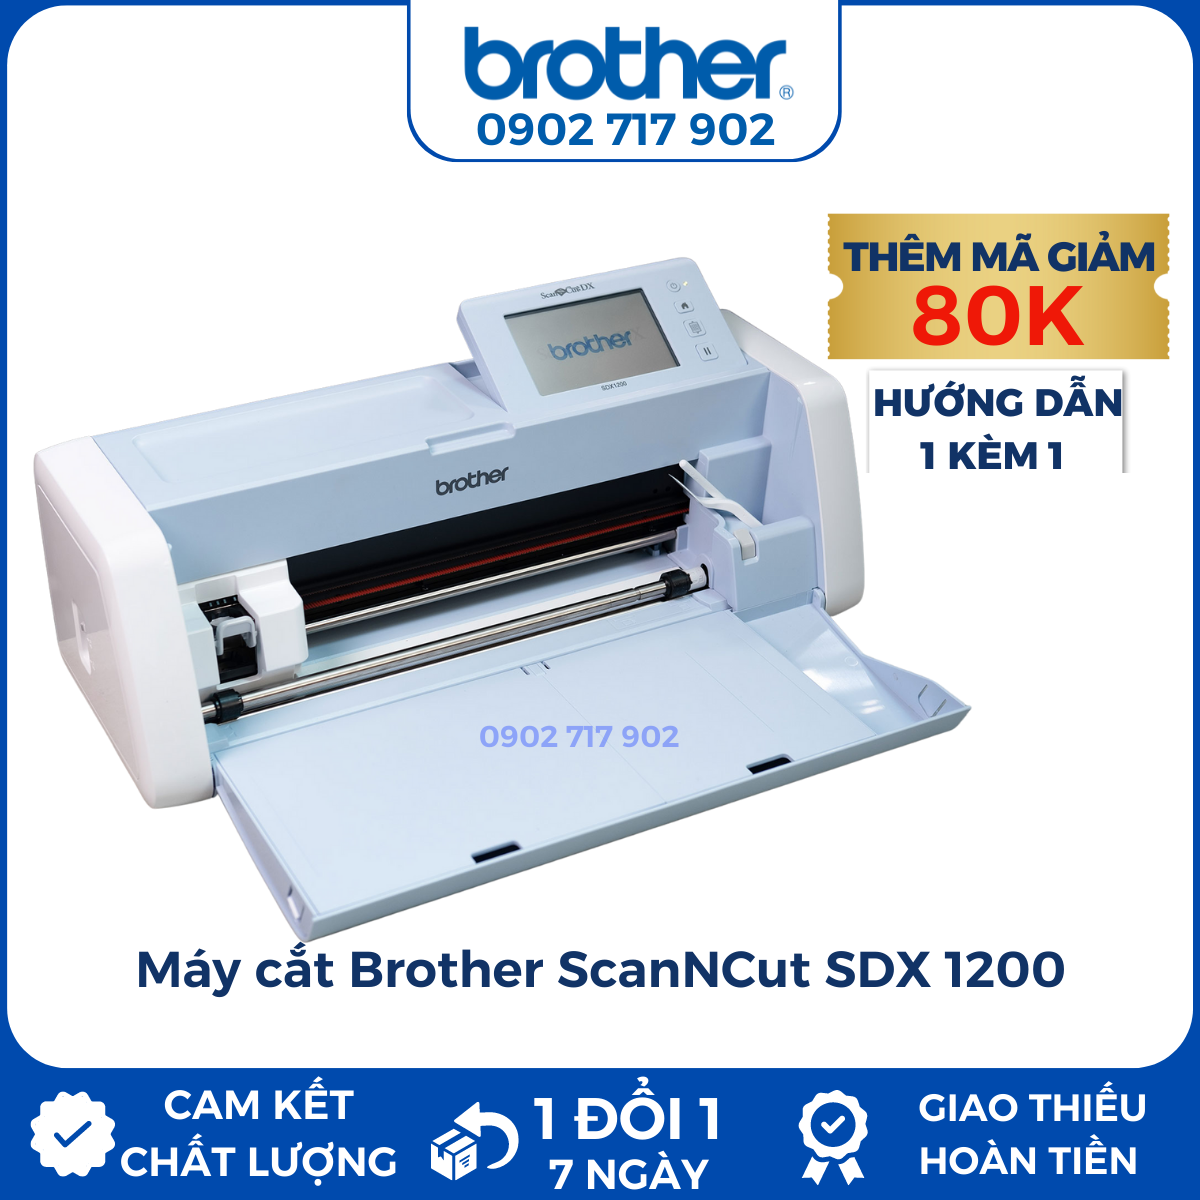 Máy Cắt Brother ScanNCut SDX1200 - BrotherVietNam.Com